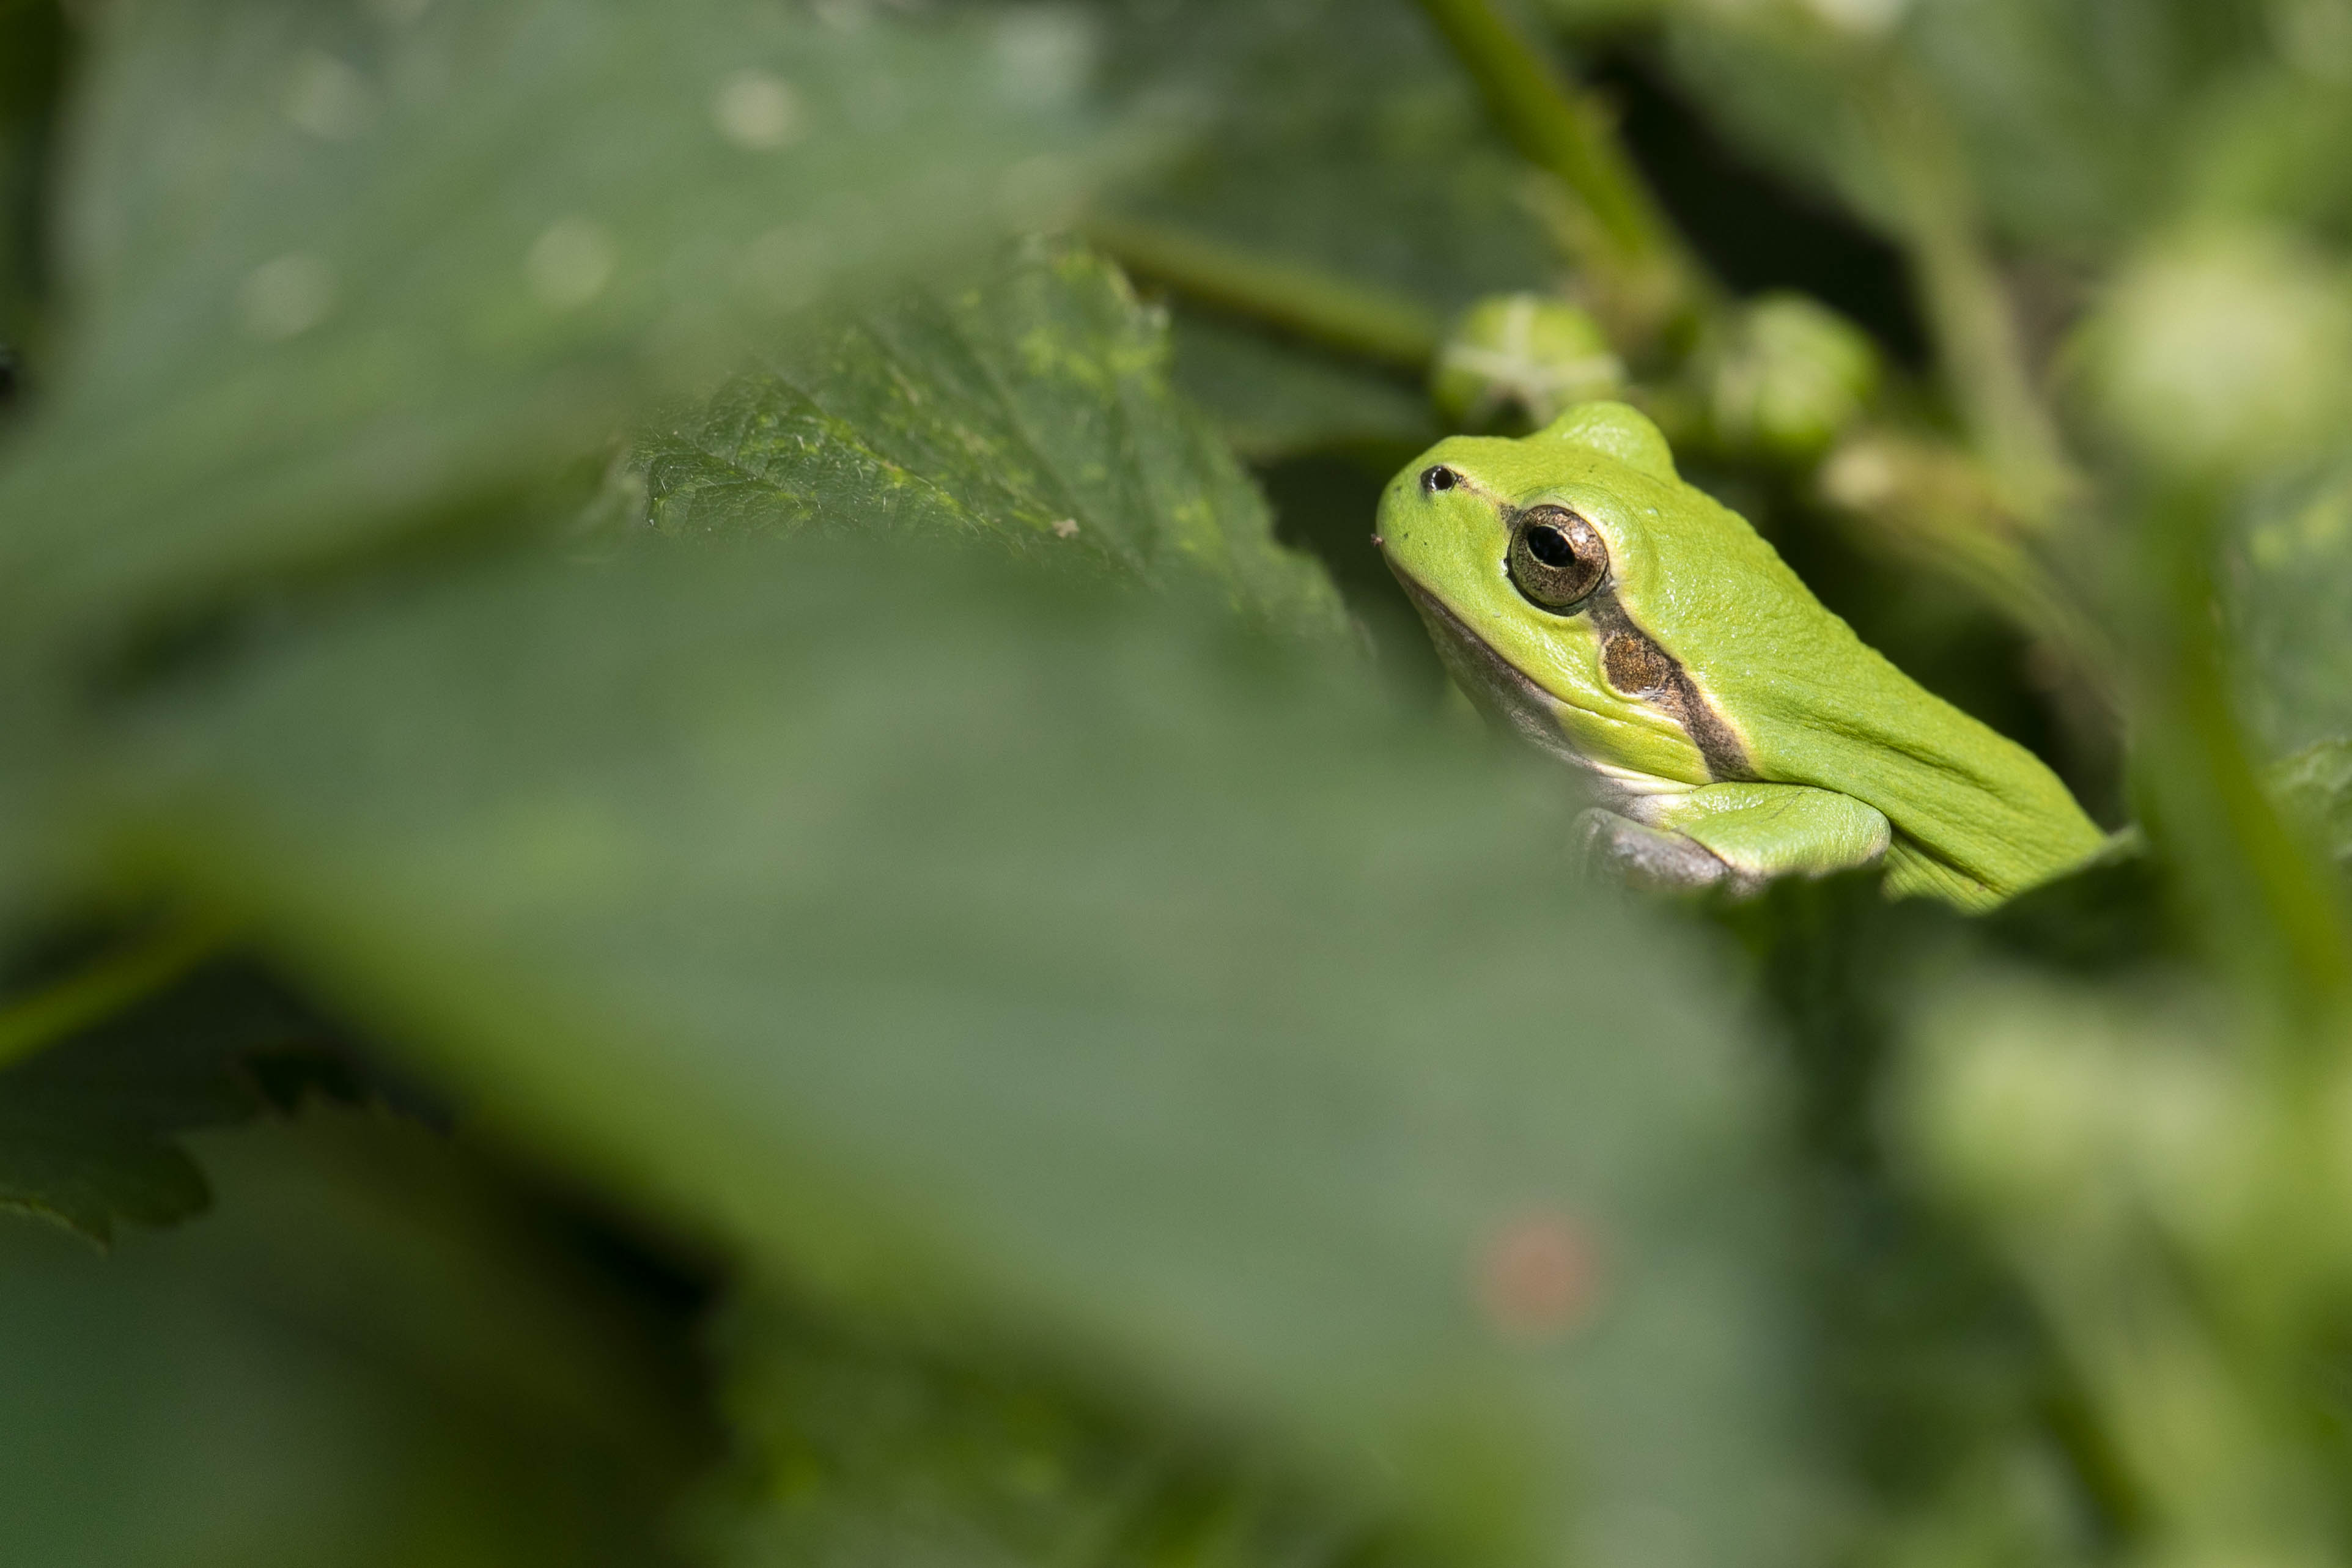 European Tree Frog (Hyla arborea) - 6/2021 - Diepenbeek (B)